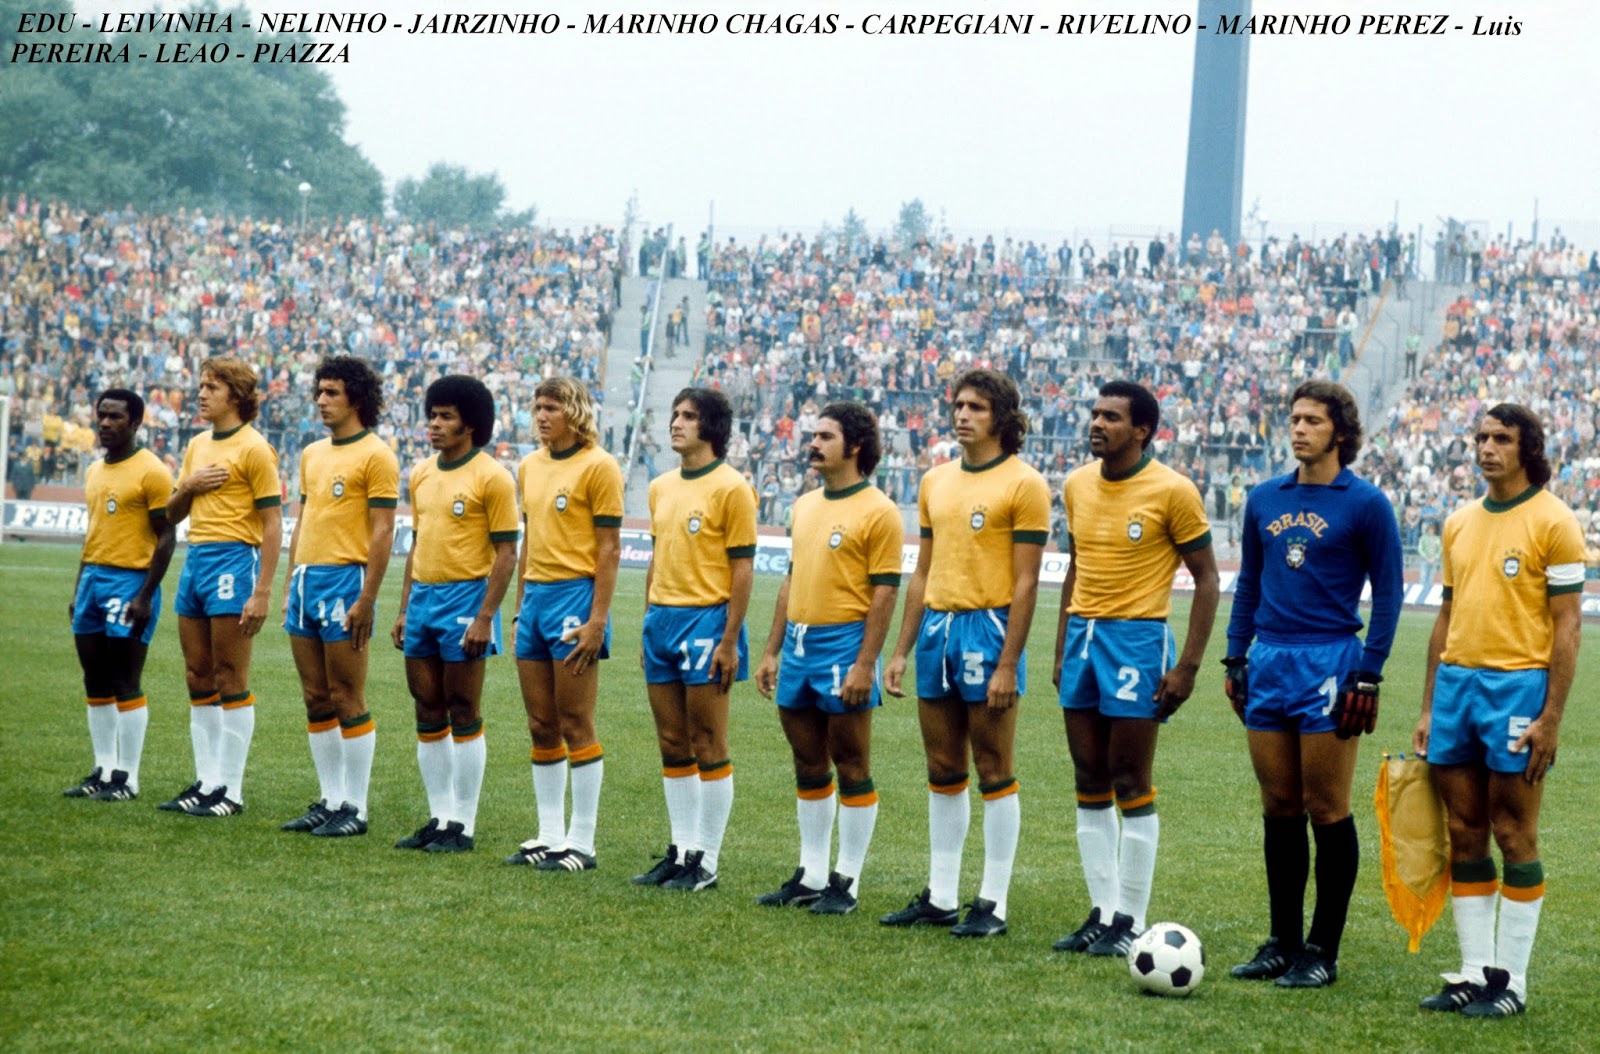 Soccer Nostalgia: Old team Photographs-Part 24f1600 x 1054